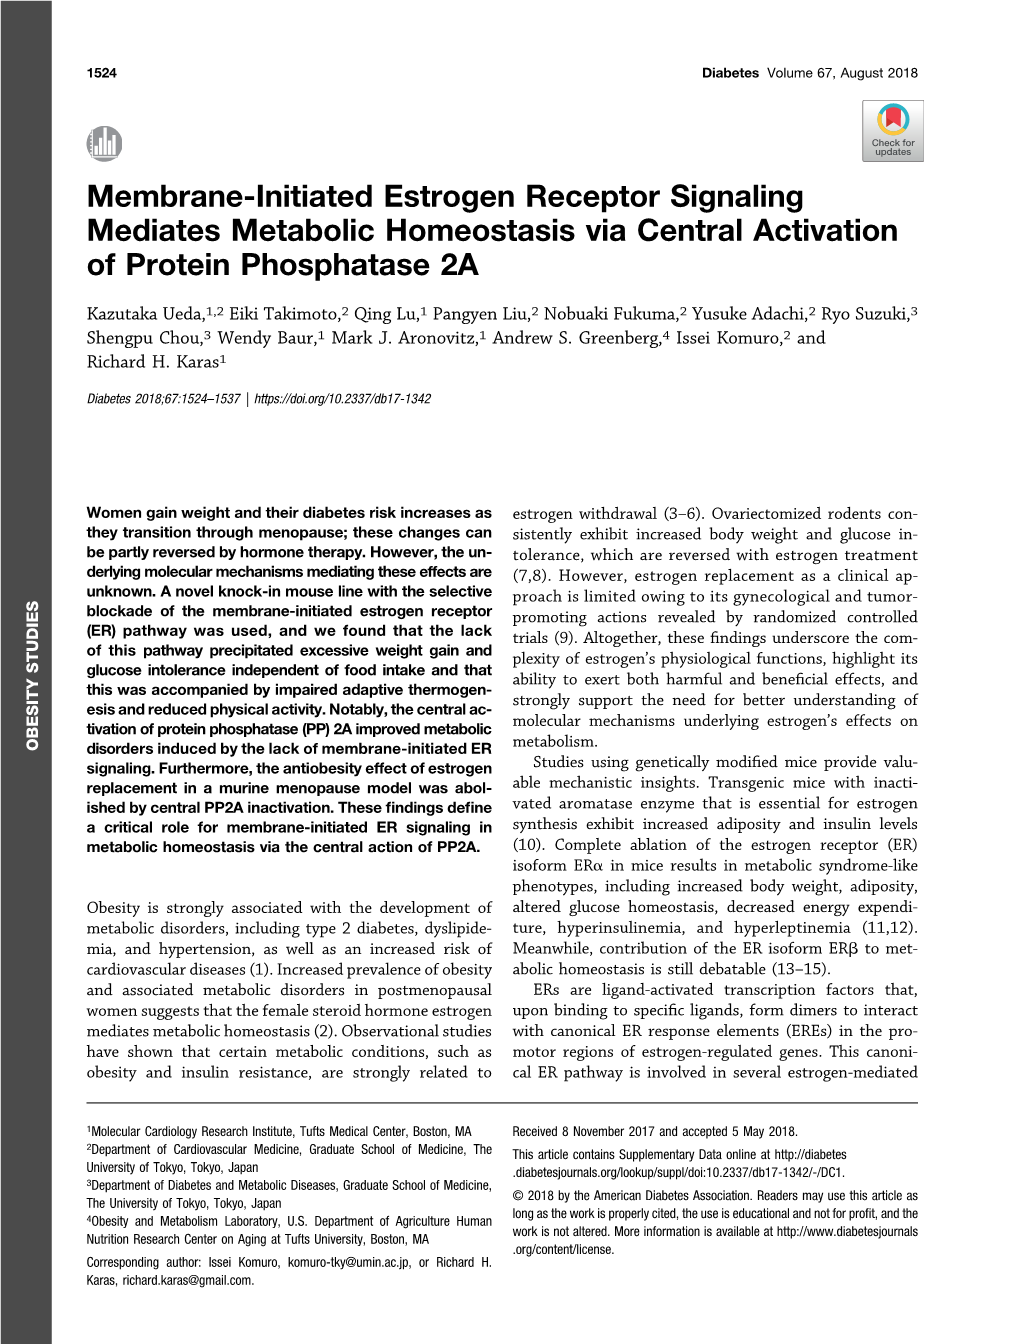 Membrane-Initiated Estrogen Receptor Signaling Mediates Metabolic Homeostasis Via Central Activation of Protein Phosphatase 2A